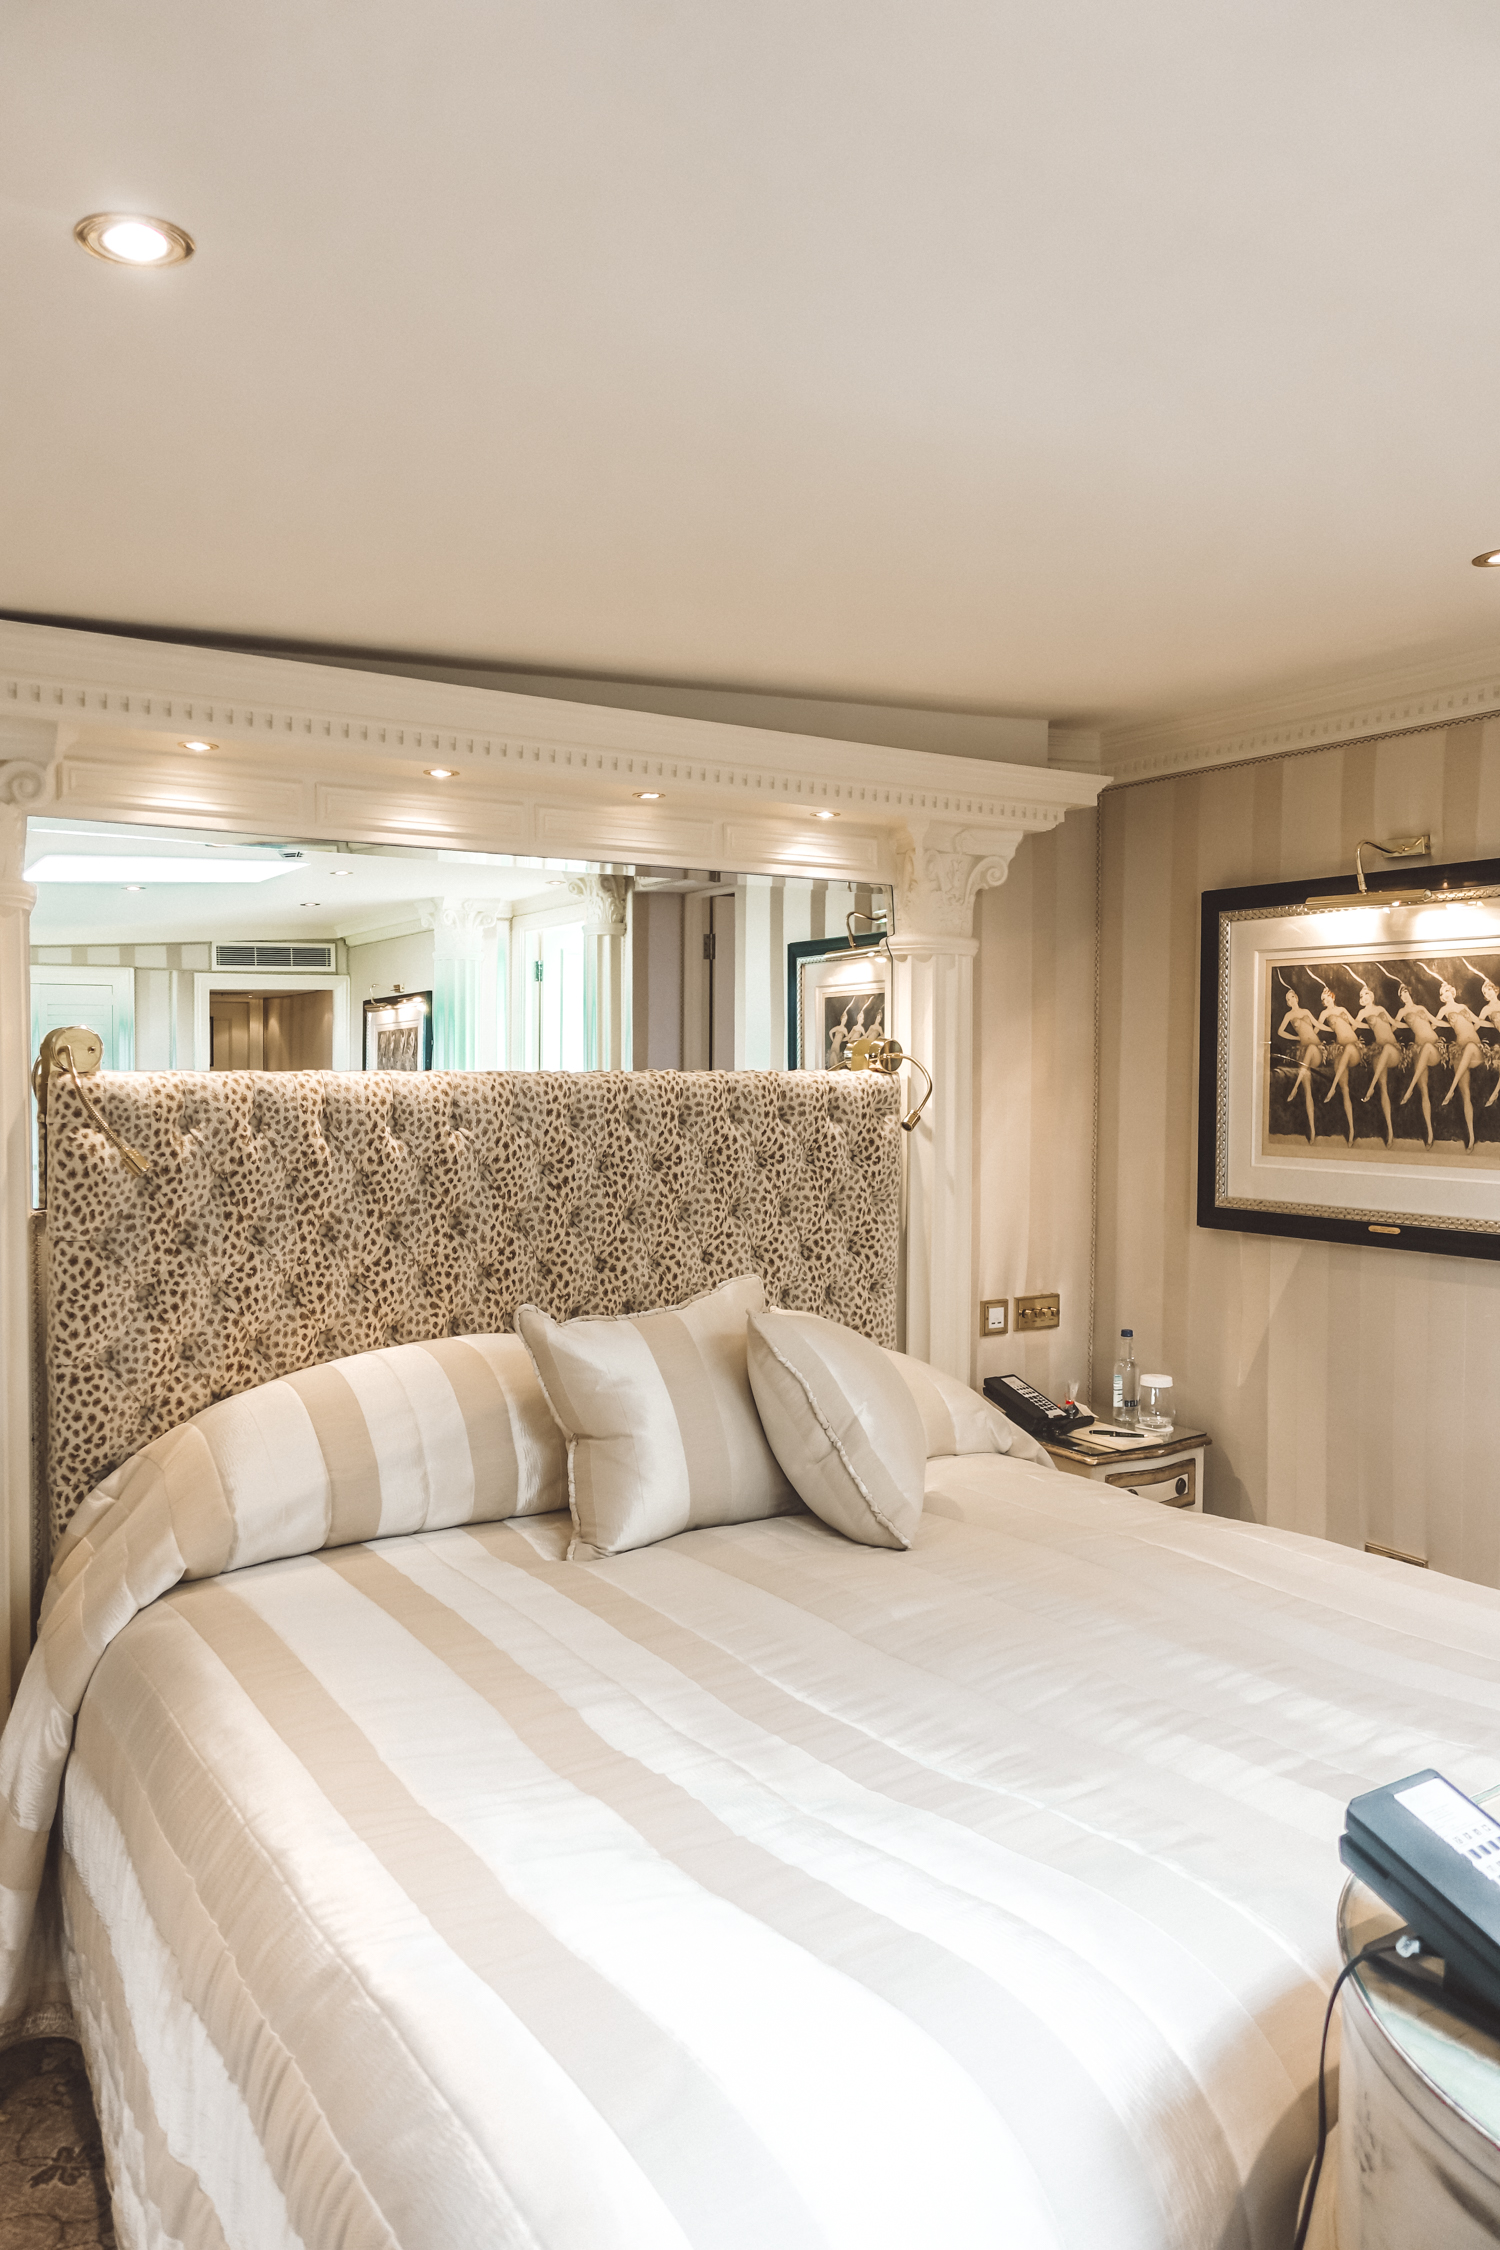 Alyssa Campanella of The A List blog experiences luxury in London at the Milestone hotel in Kensington